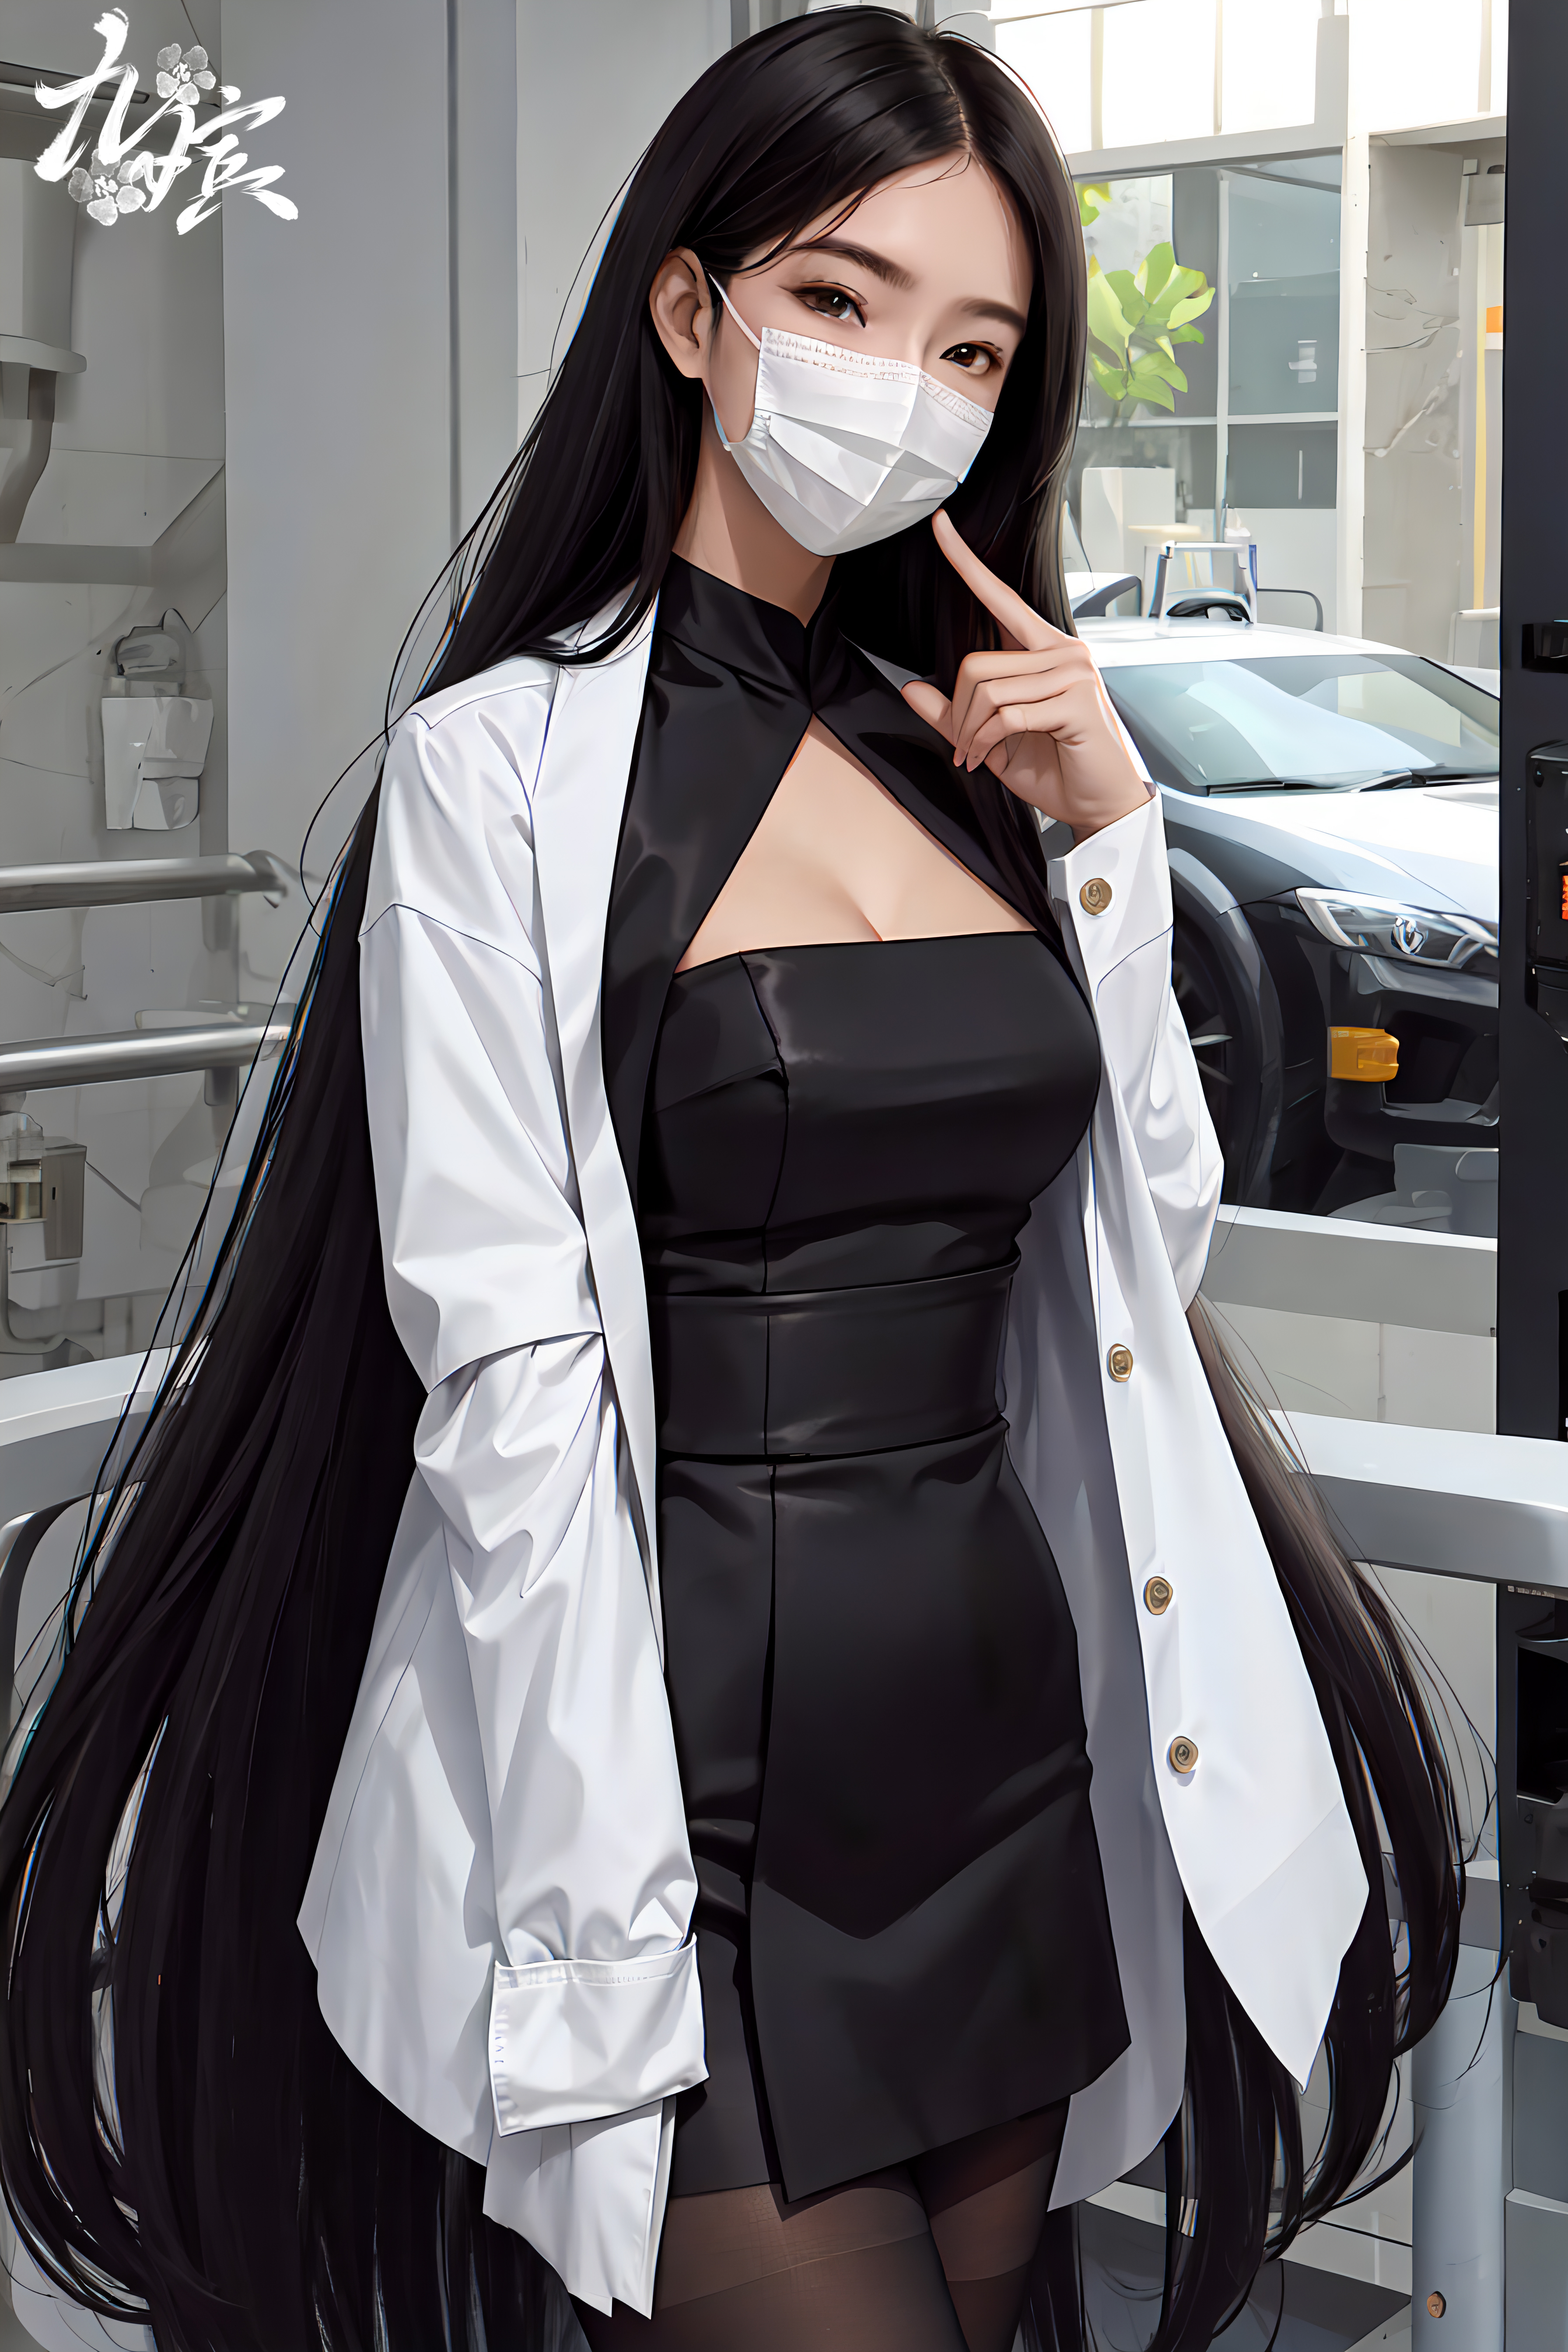 Anime 3584x5376 AI art uniform portrait display Asian women mask looking at viewer pantyhose car long hair